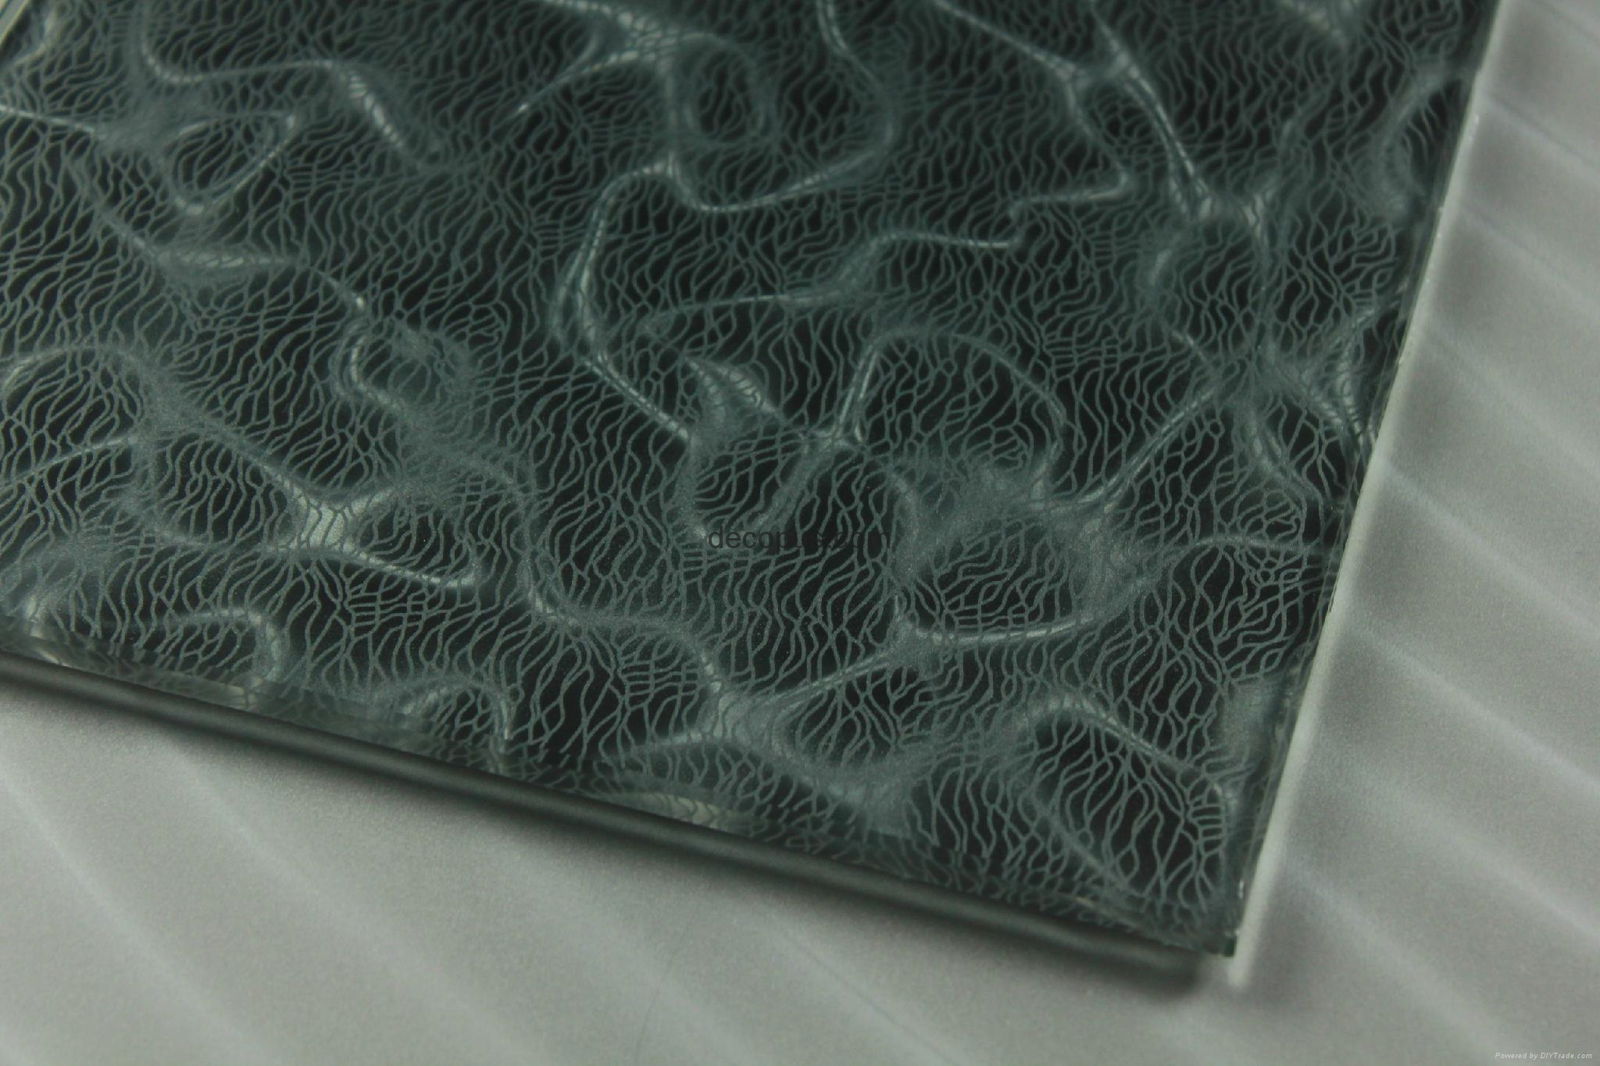 glass tile stereoscopic effect-Web Smoggy Sun 2